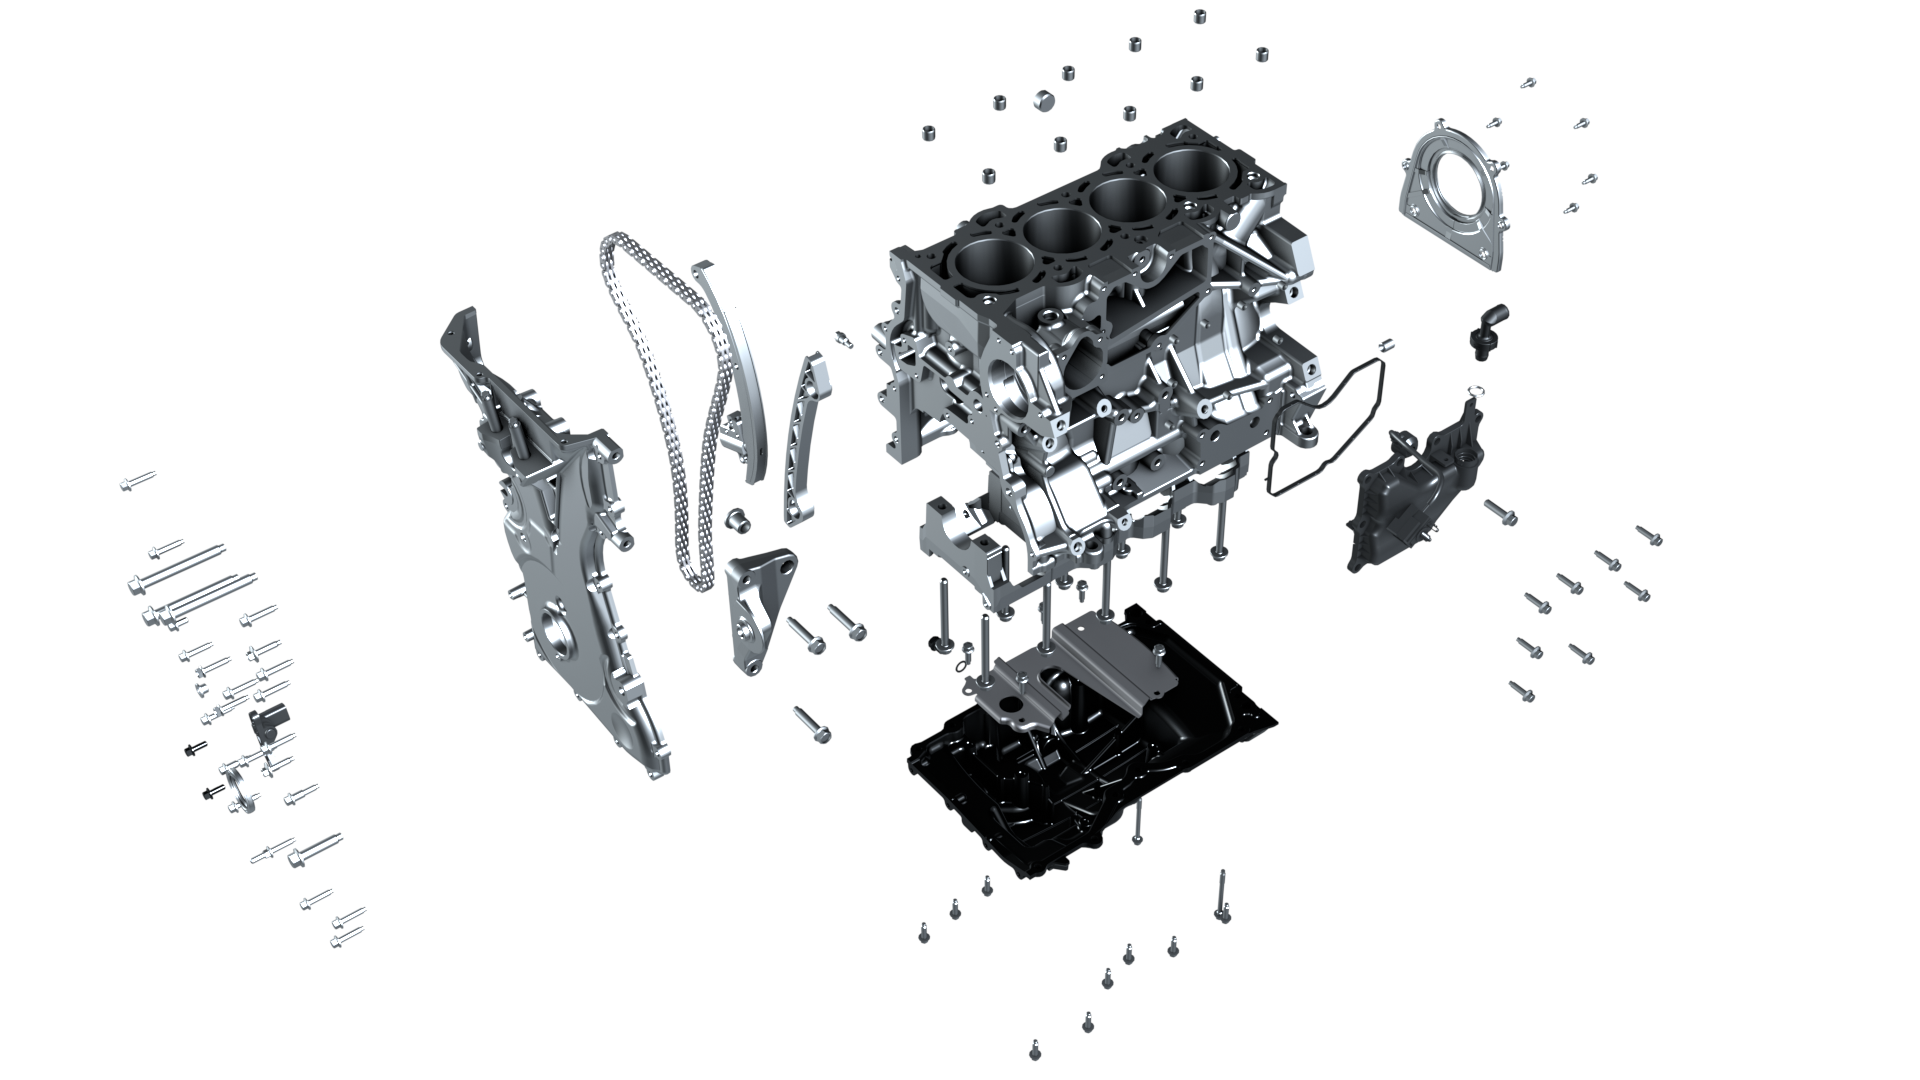 Car engine parts catalogue